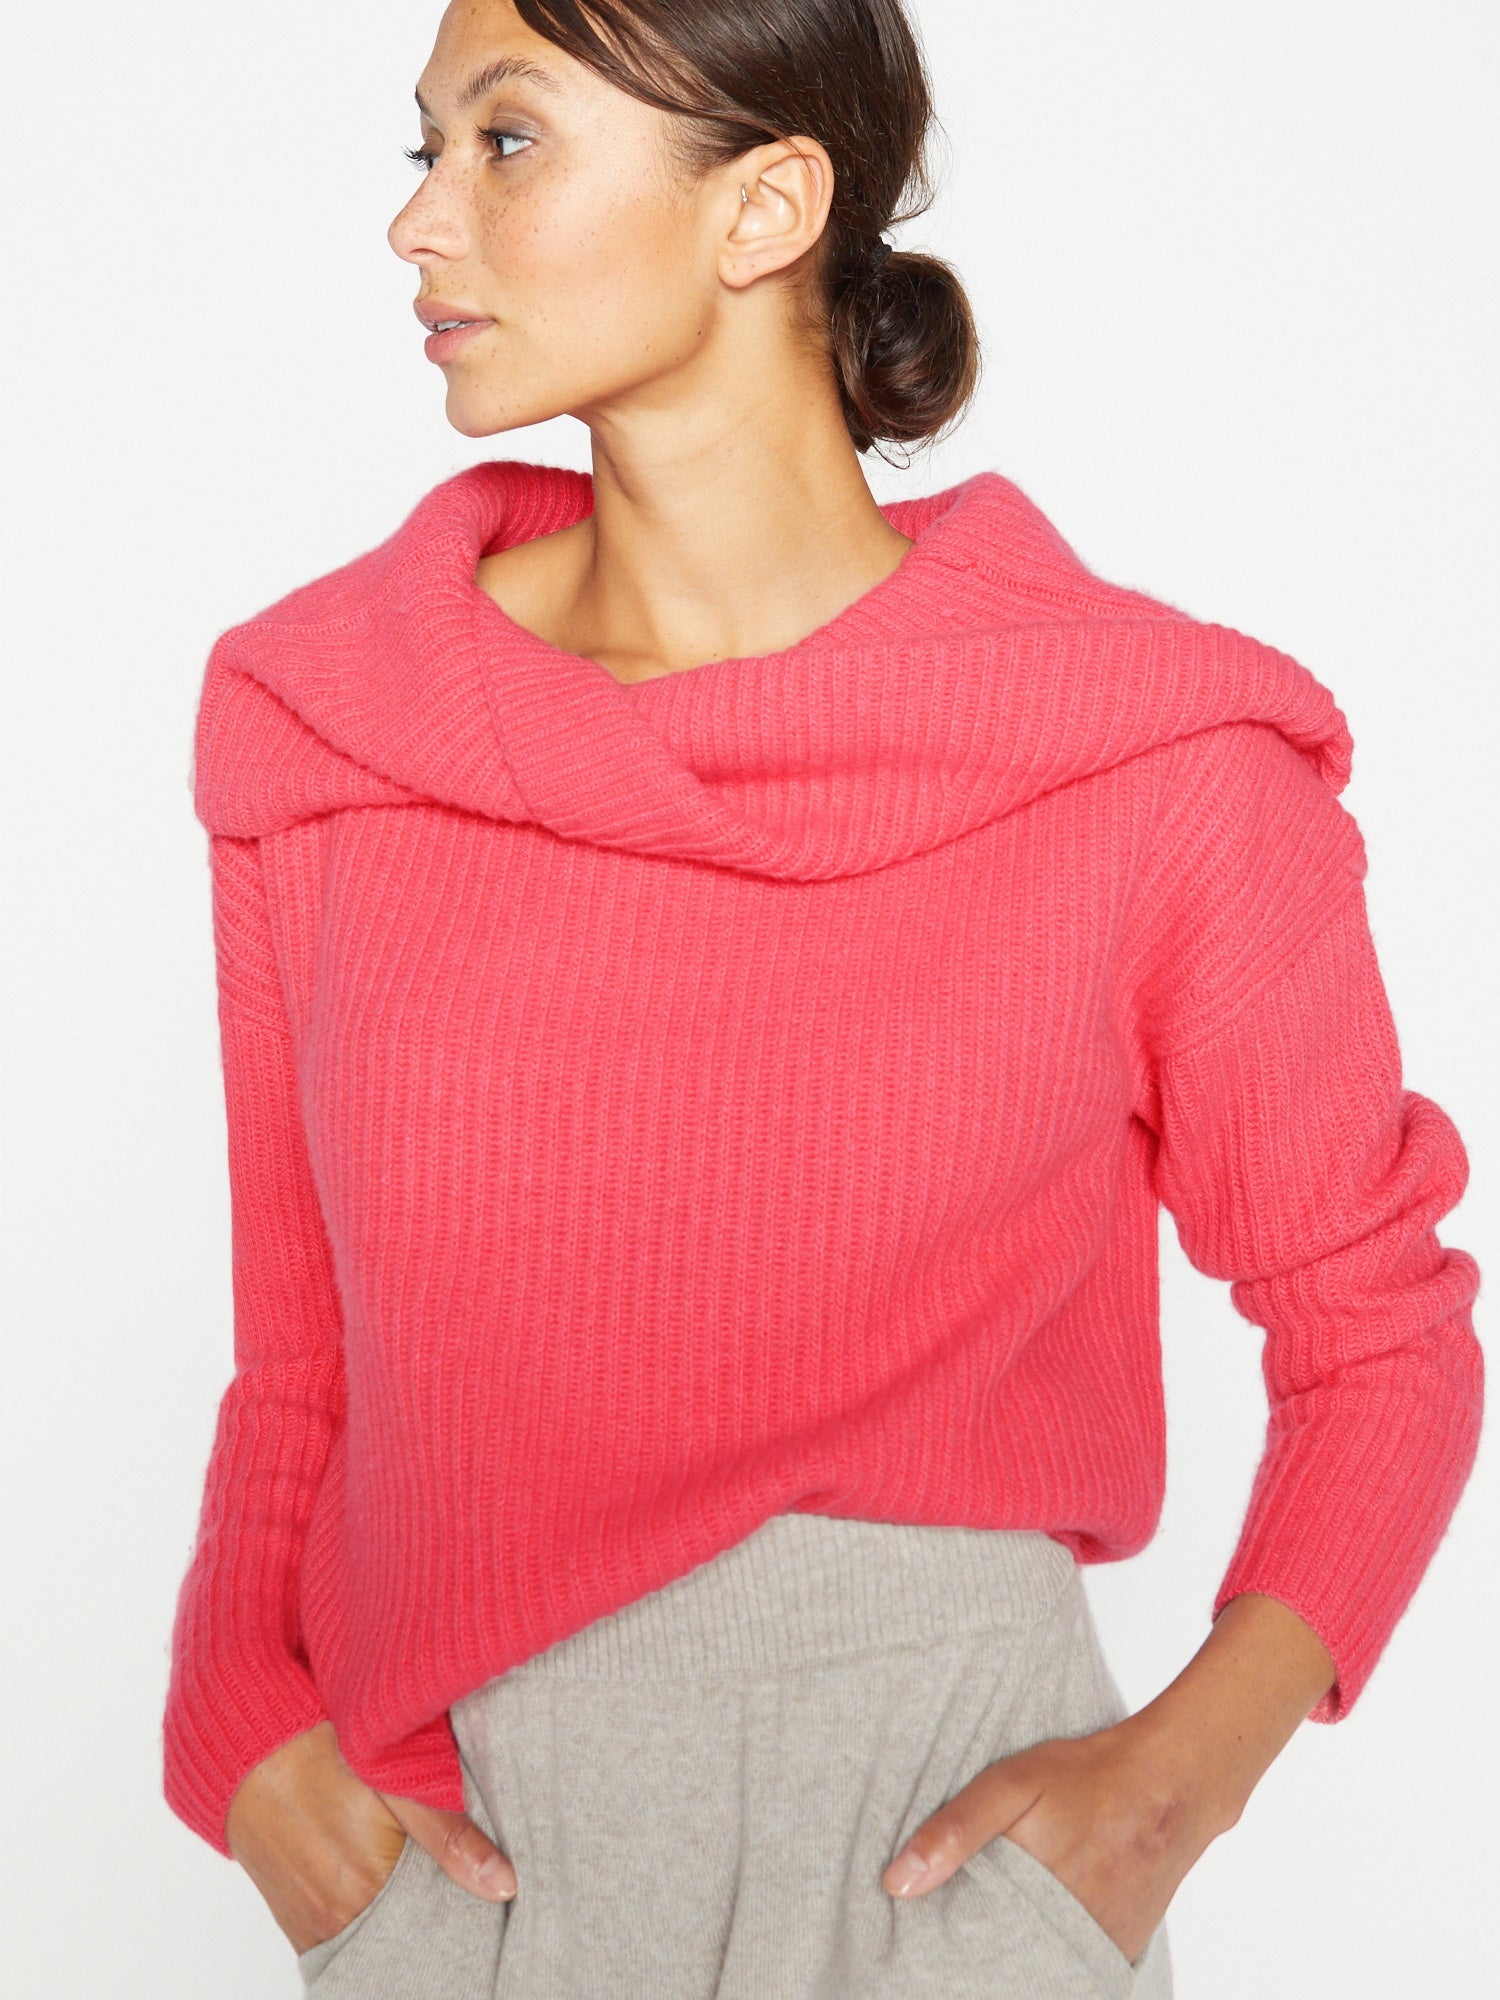 Riser pink off shoulder sweater front view 3